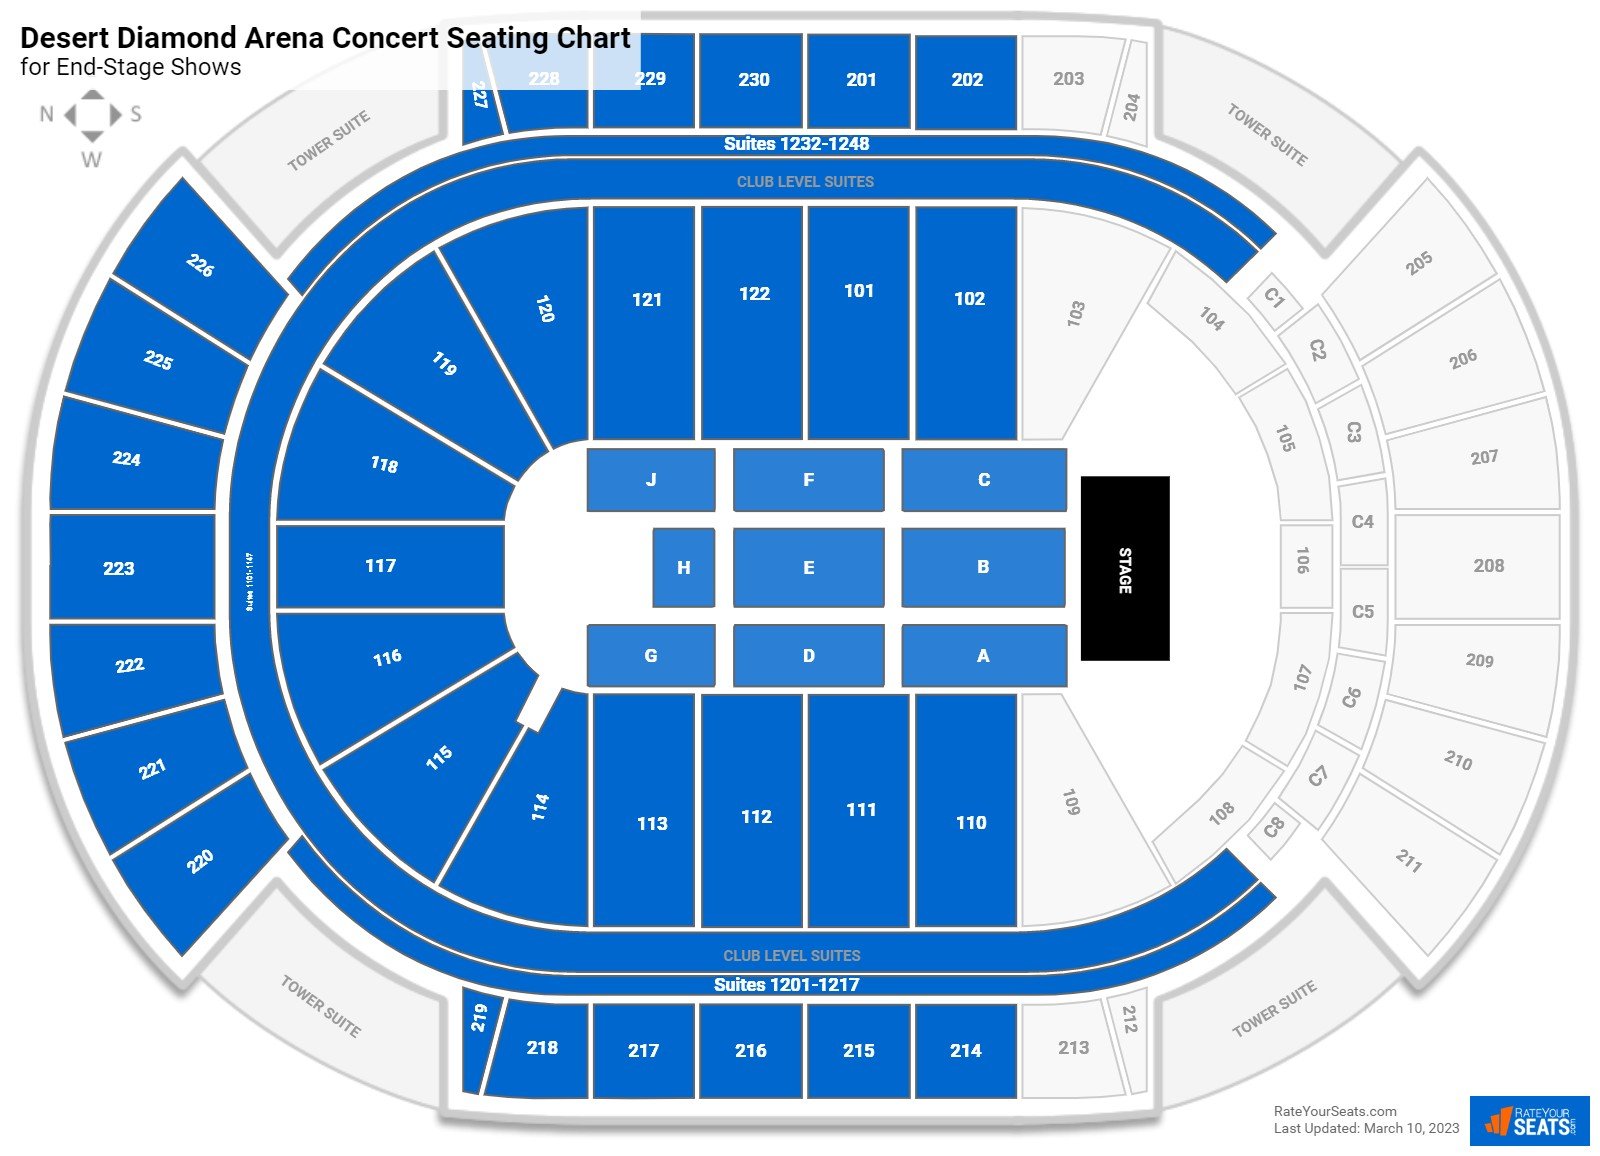 Desert Diamond Arena Concert Seating Chart